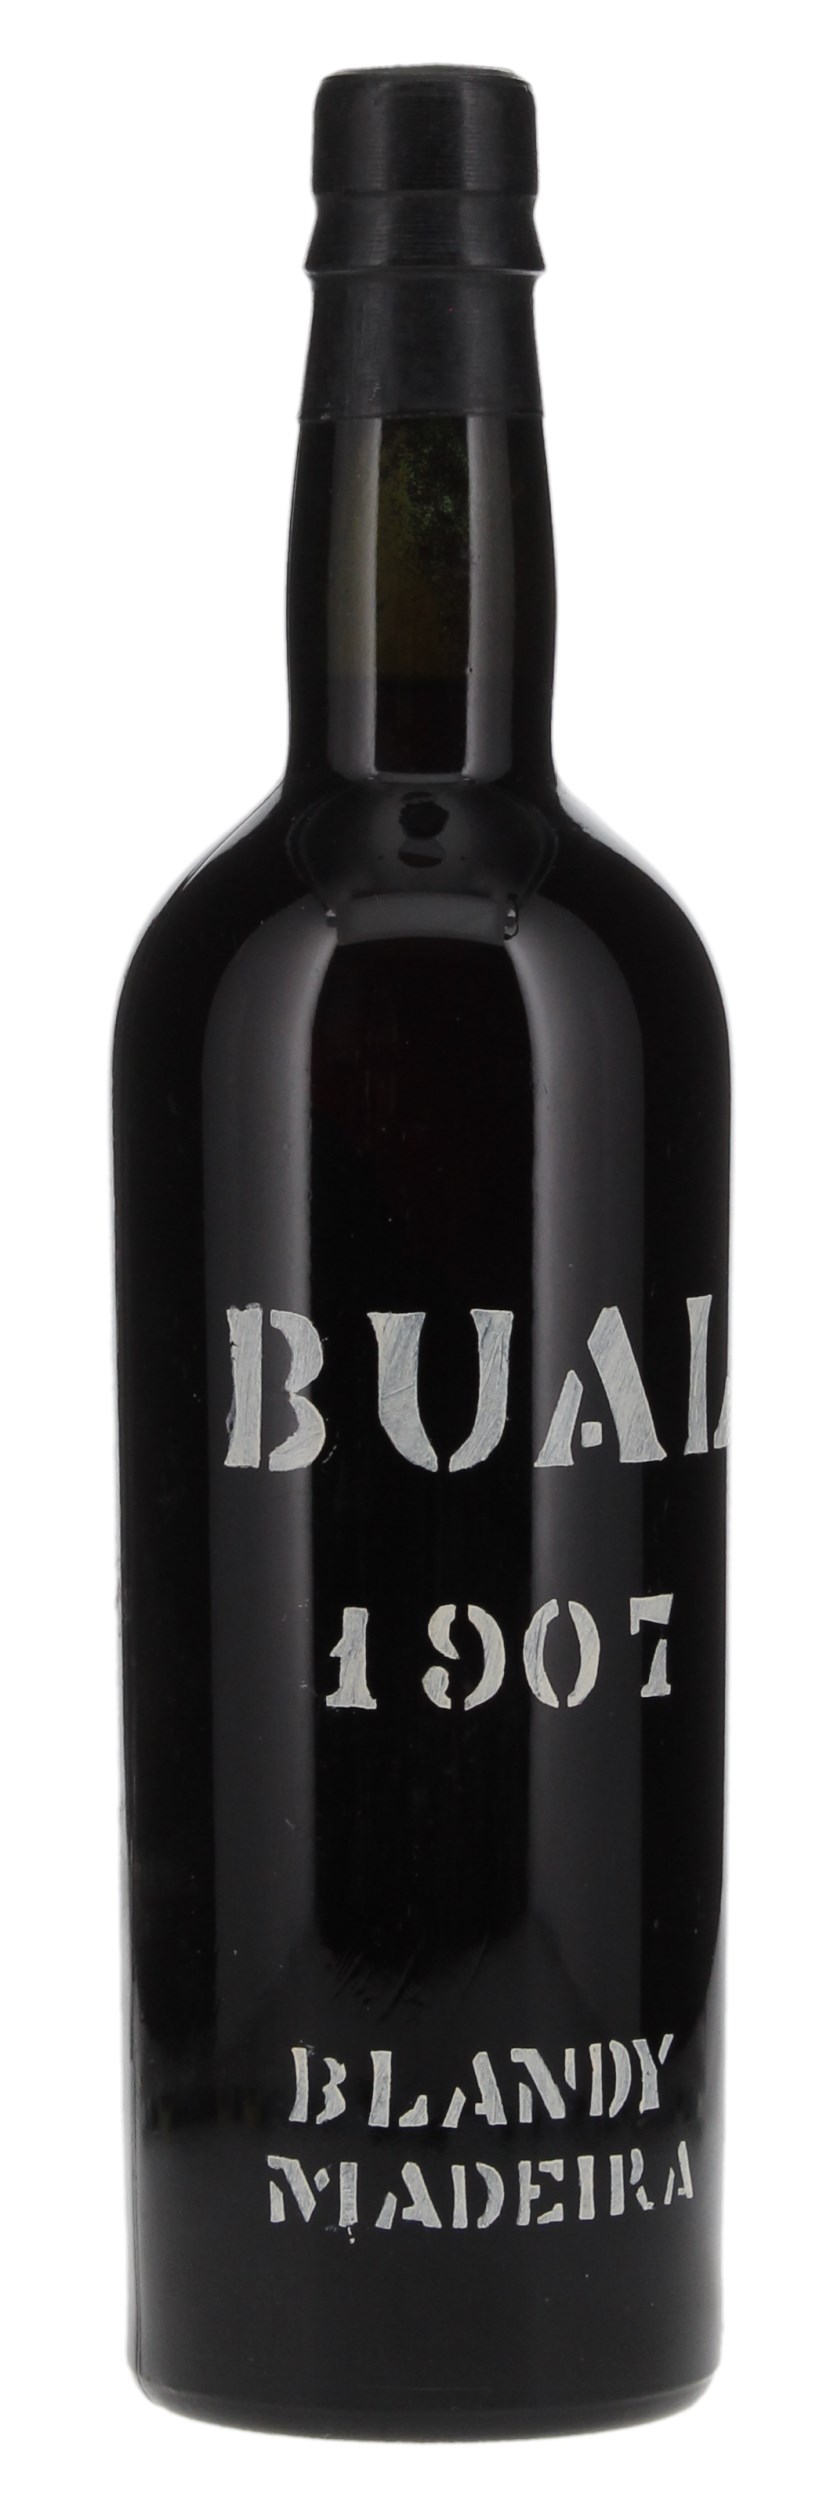 1907 Blandy's Boal Madeira, 750ml